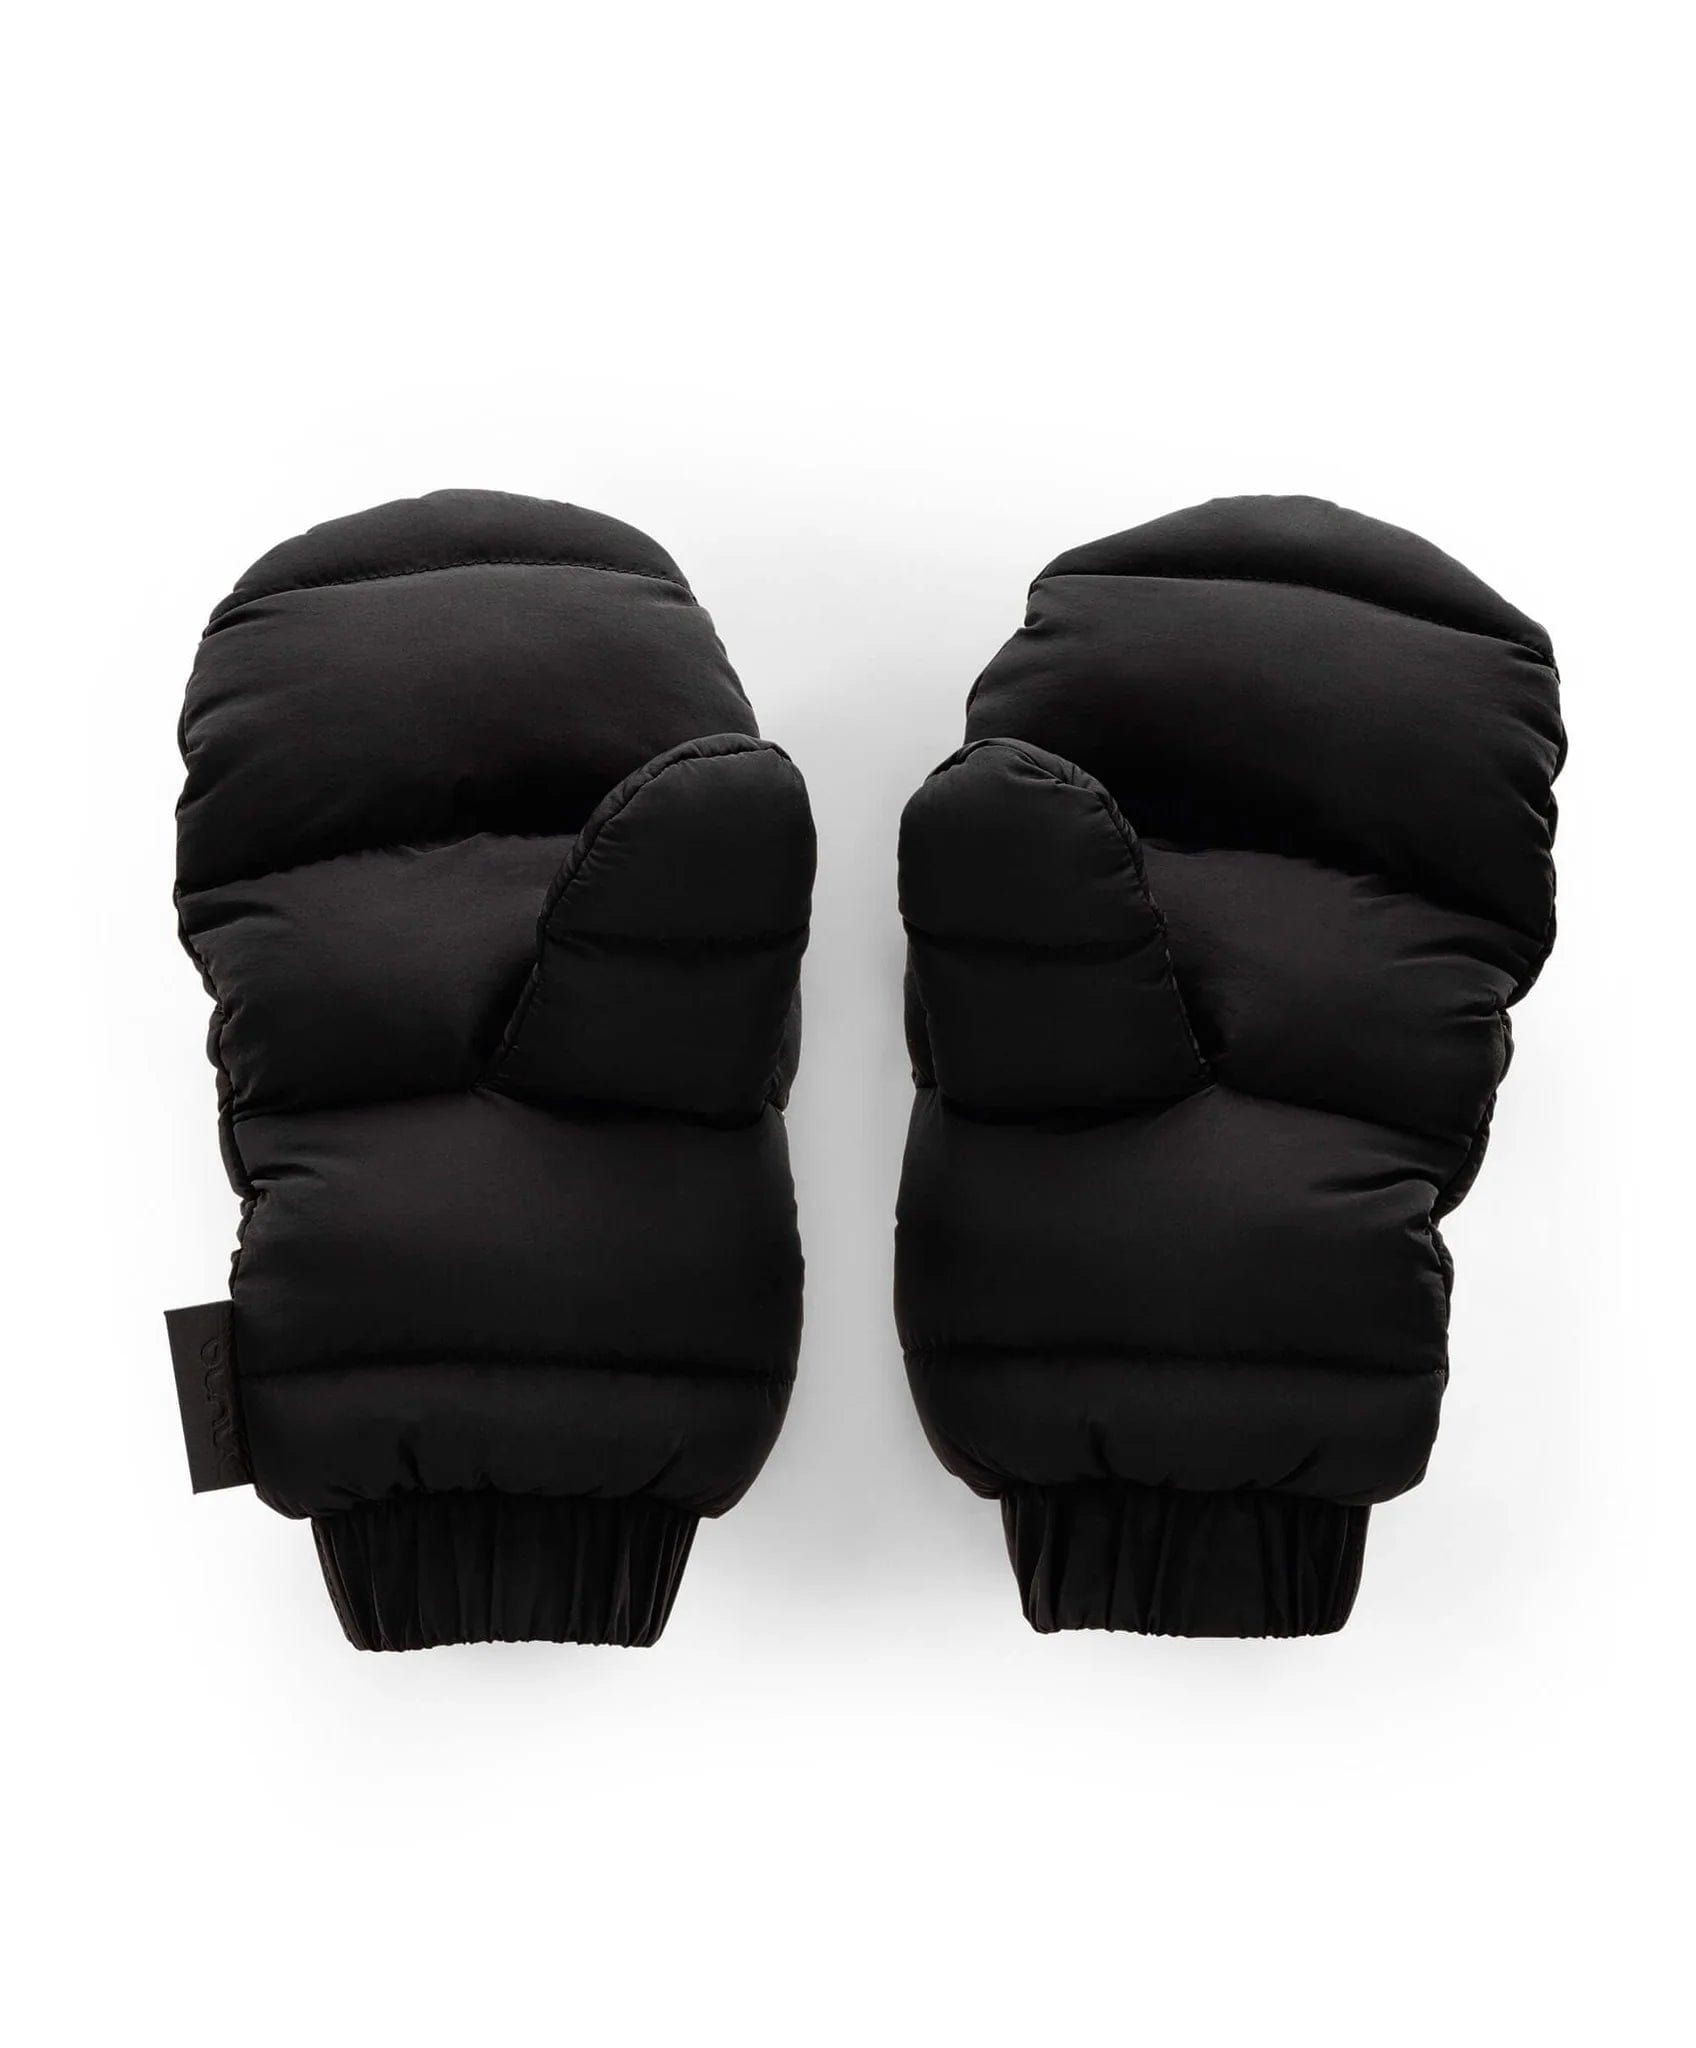 BabyZen footmuffs Nuna Winter Stroller Footmuff Set (inc. Gloves and Bag) in Caviar FG00001CVRGL